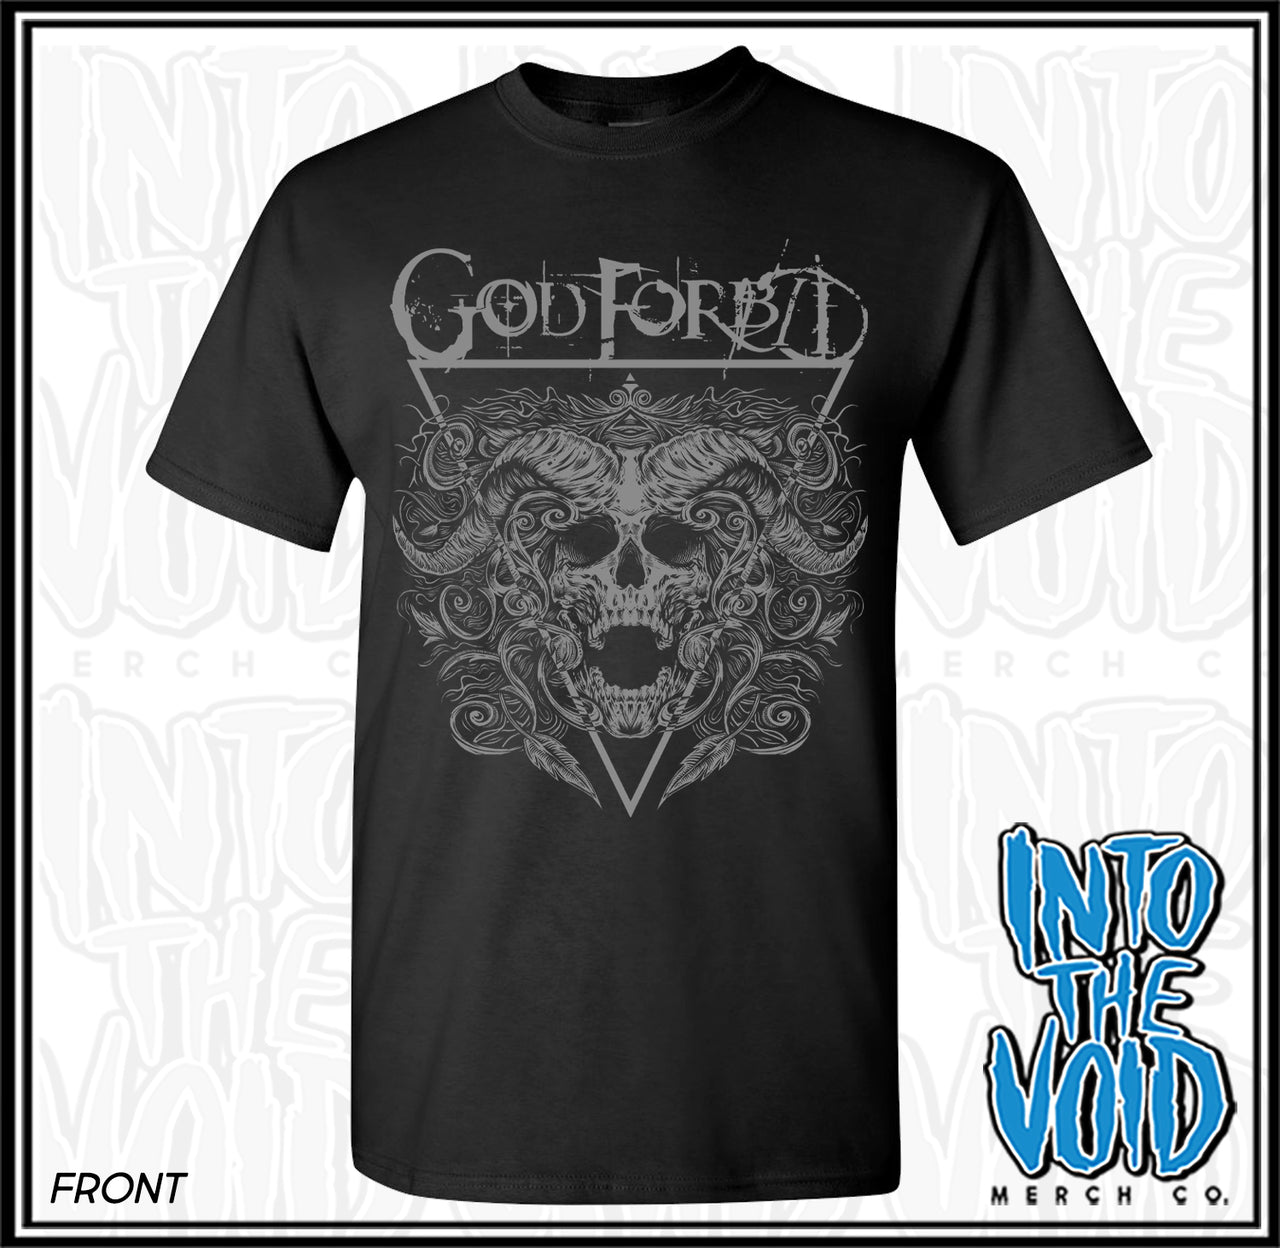 GOD FORBID - FLORIDA WORLD TOUR - Short Sleeve T-Shirt